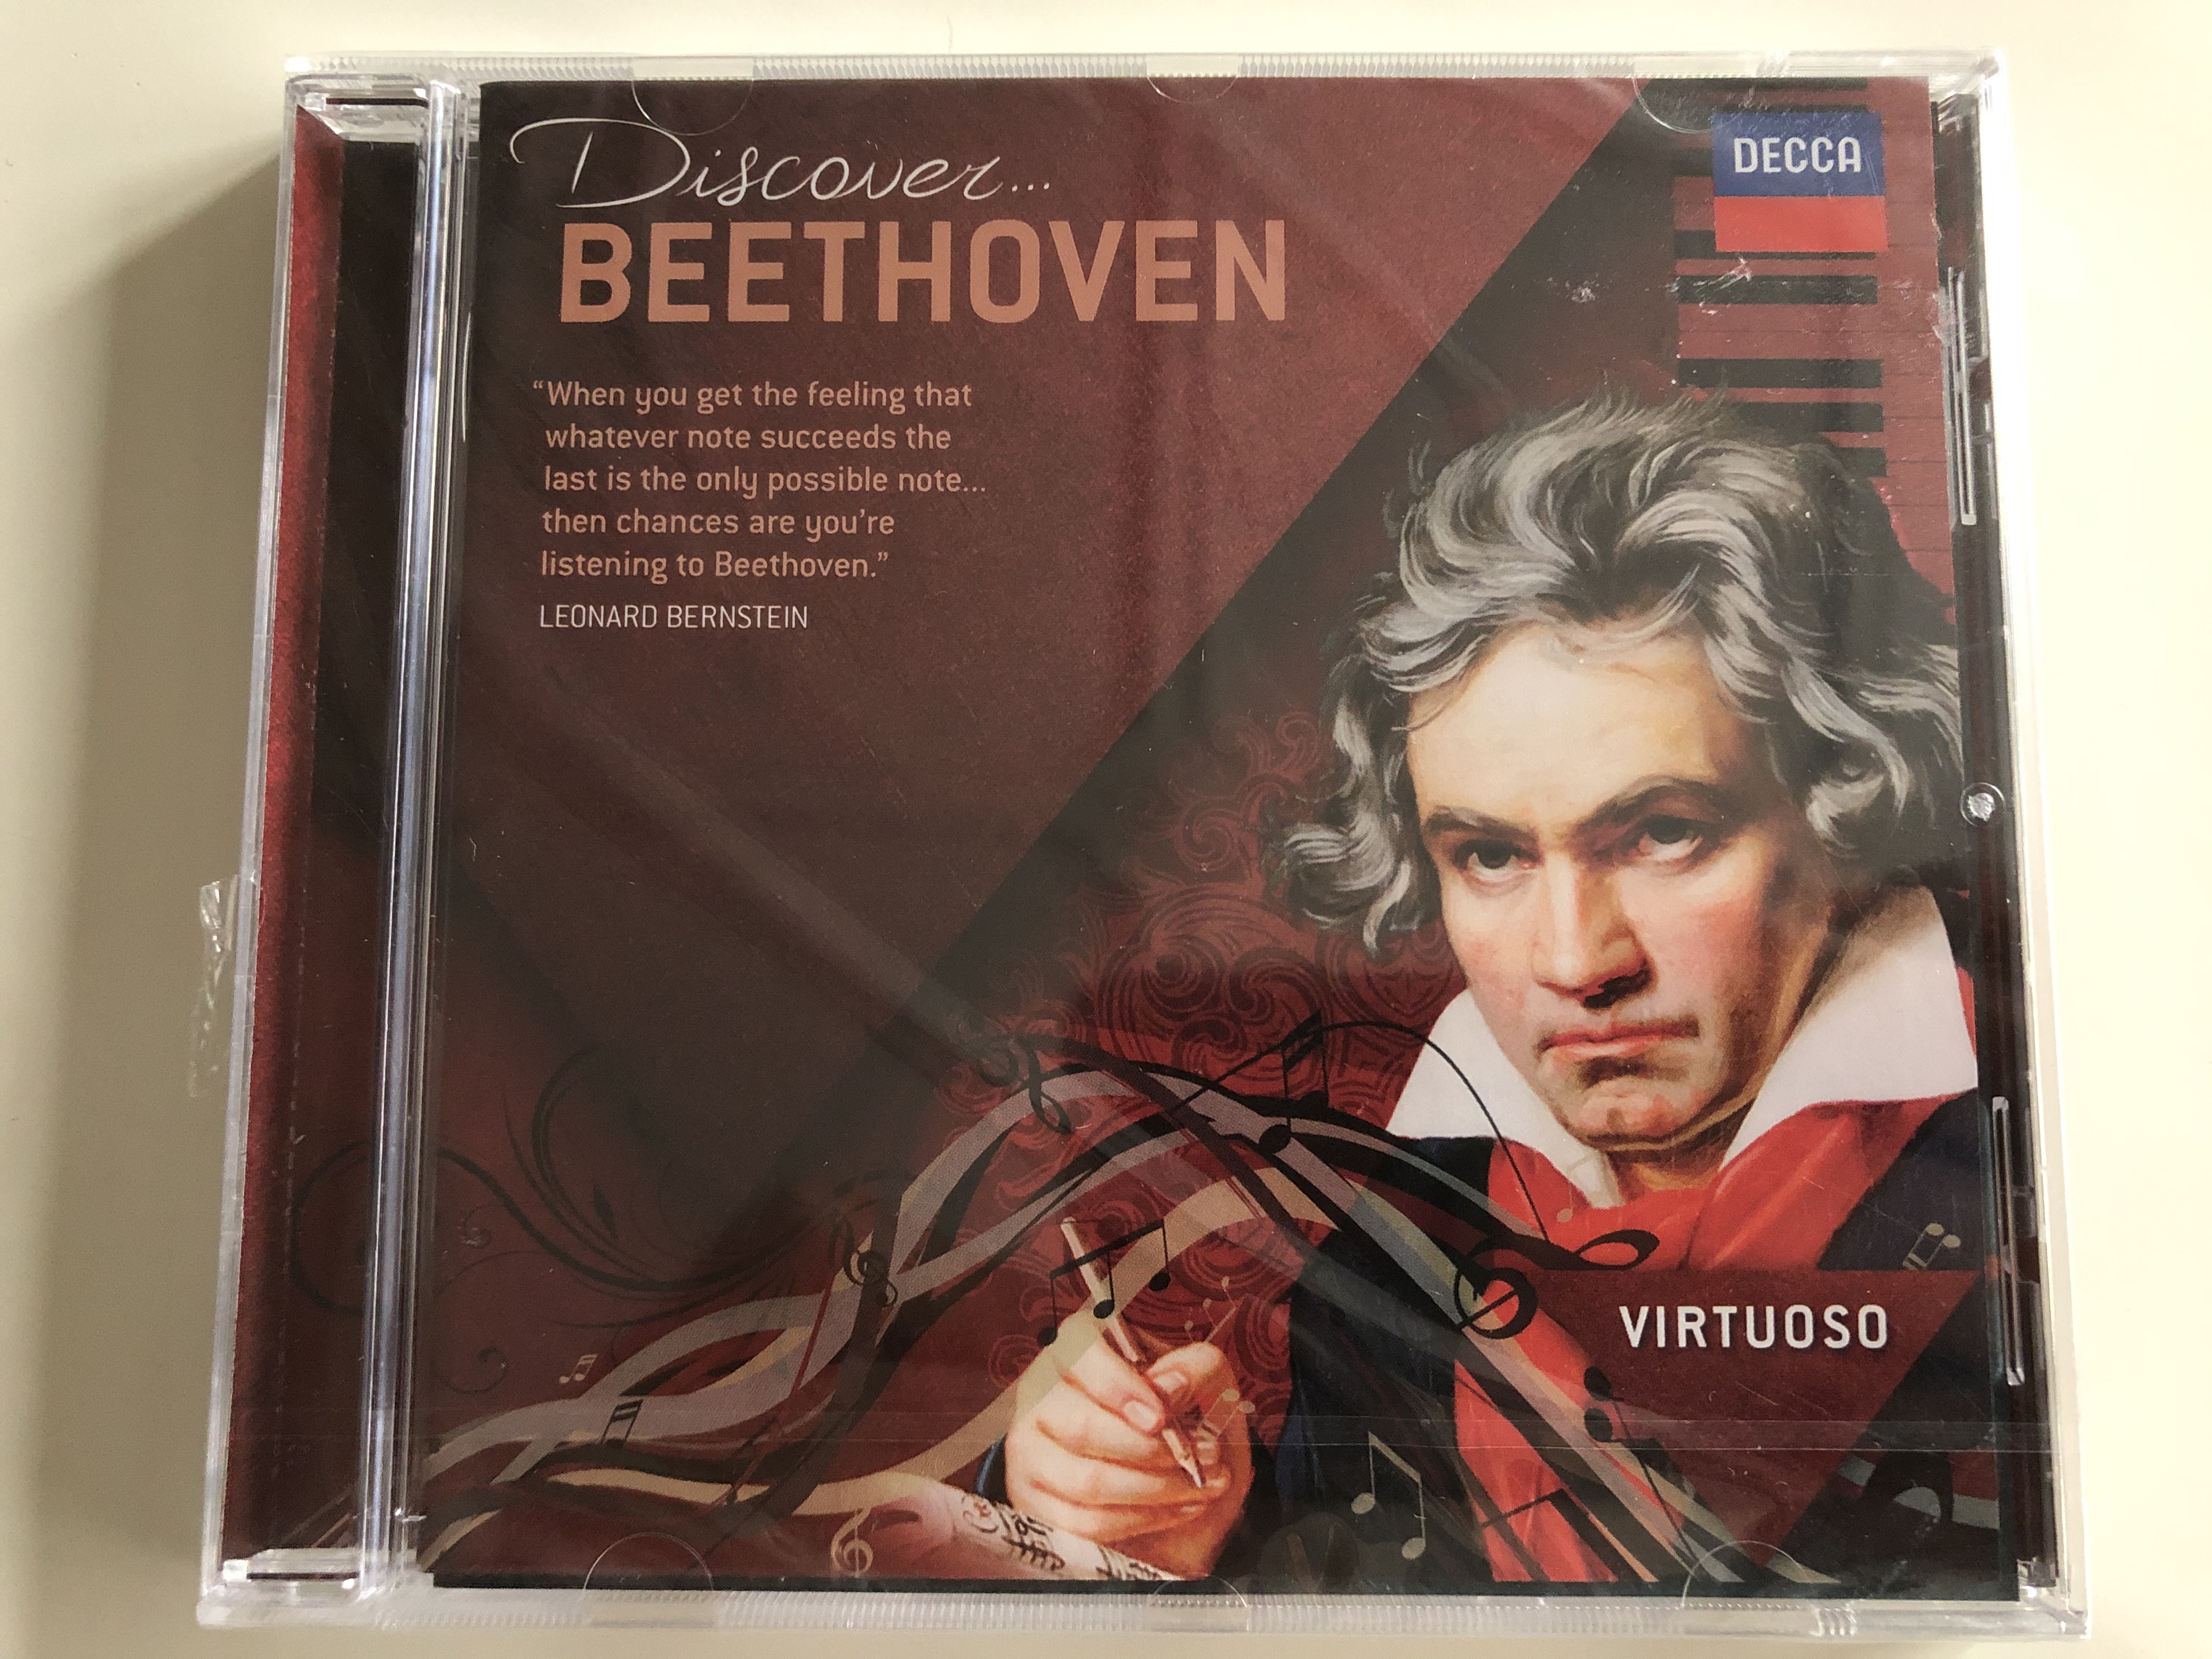 discover-...-beethoven-virtuoso-decca-audio-cd-2013-478-5693-1-.jpg